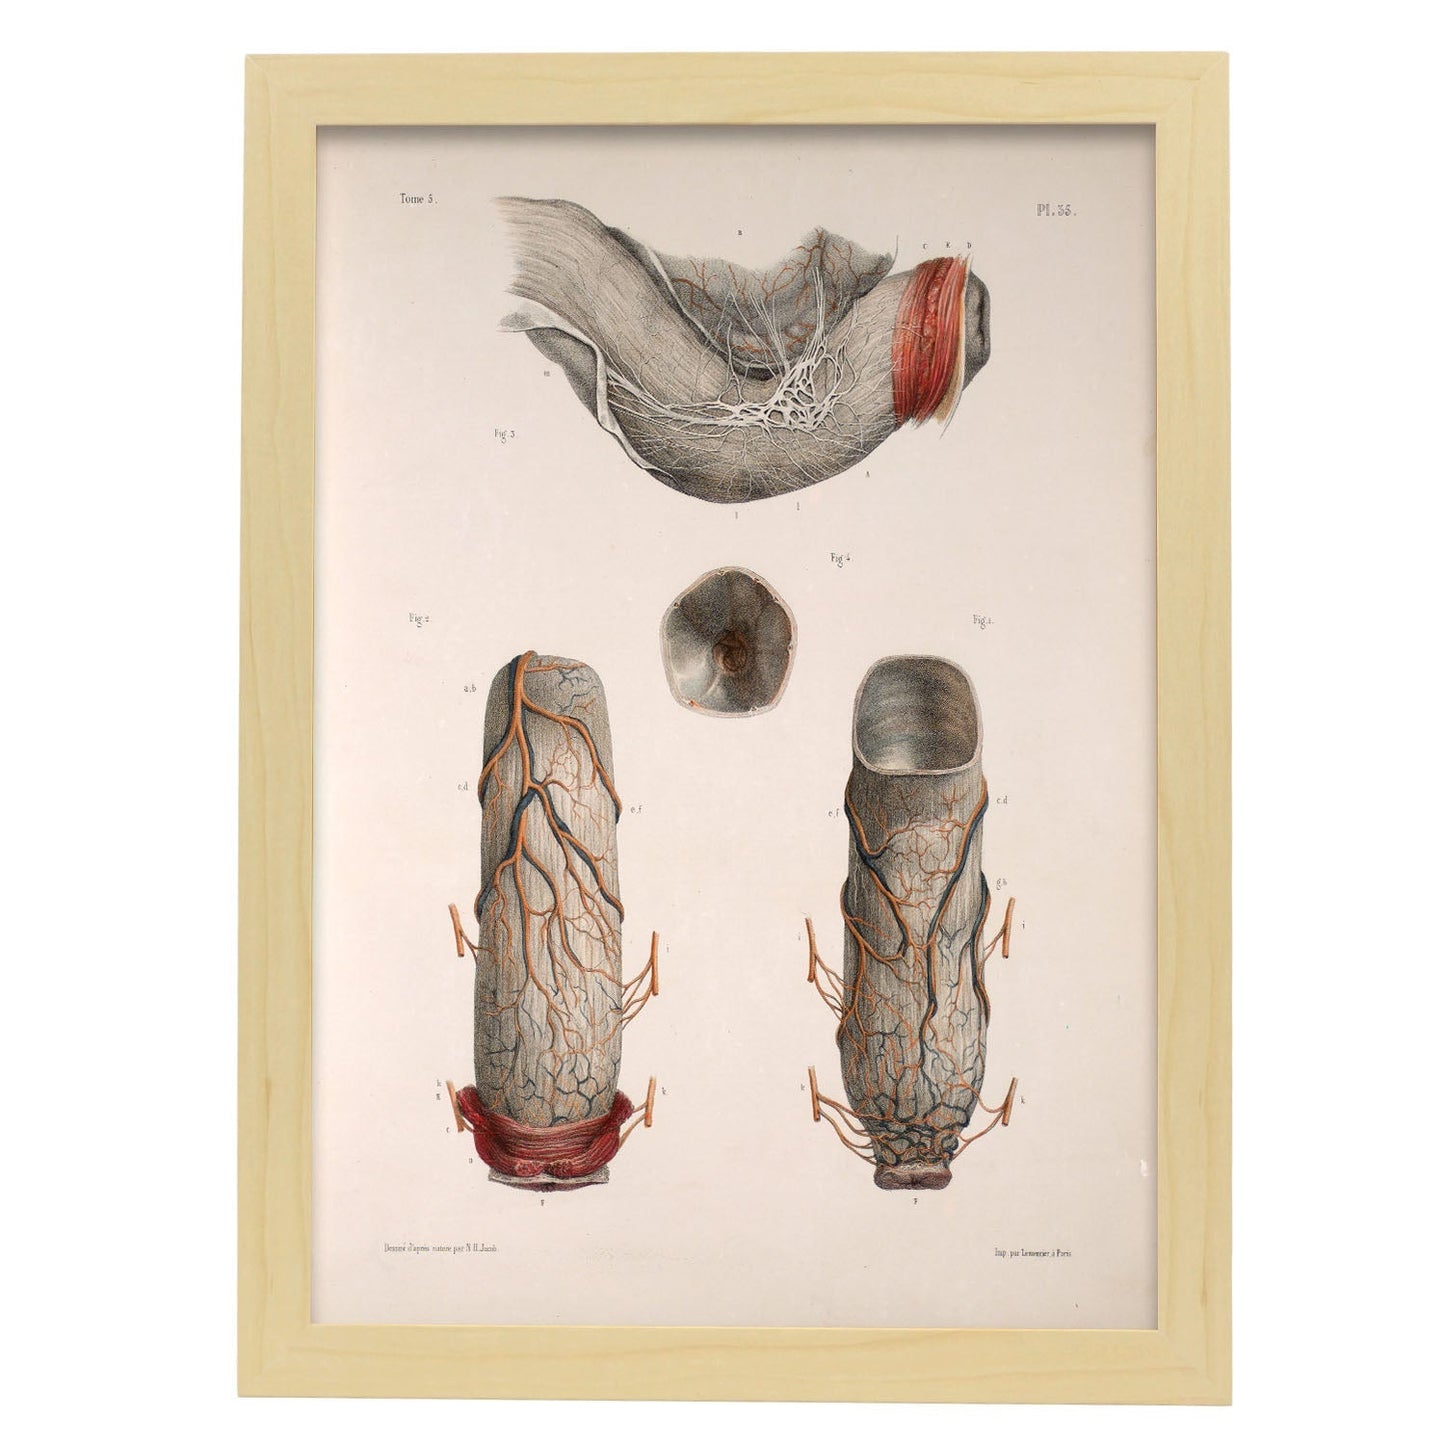 Large intestine, rectum and anus-Artwork-Nacnic-A3-Marco Madera clara-Nacnic Estudio SL